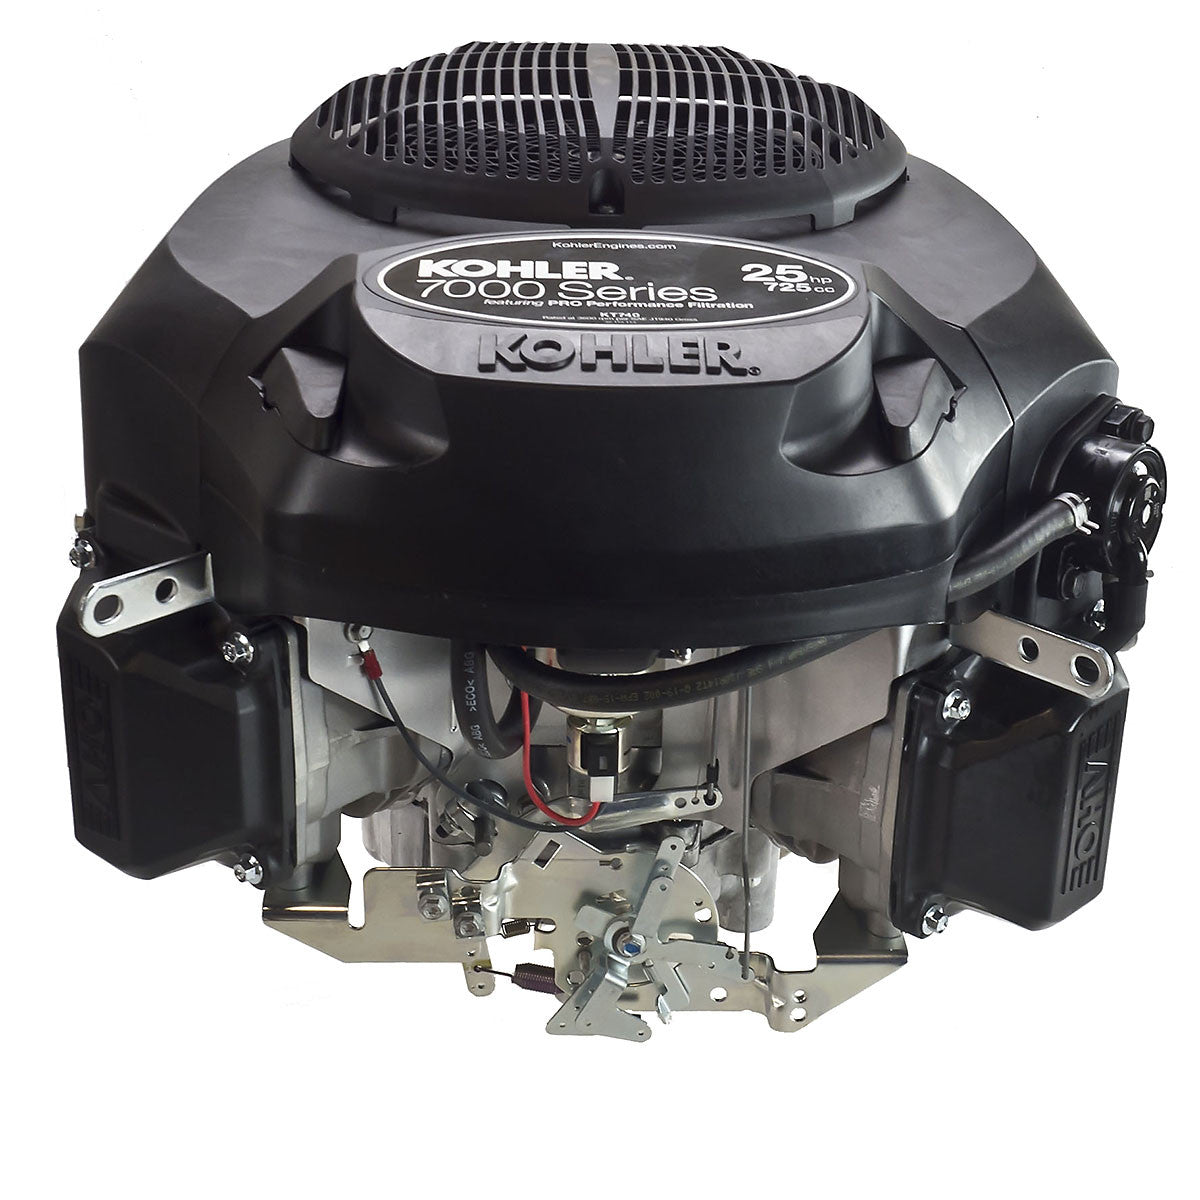 Kohler 7000 Series 25HP Replacement Engine #KT740-3045